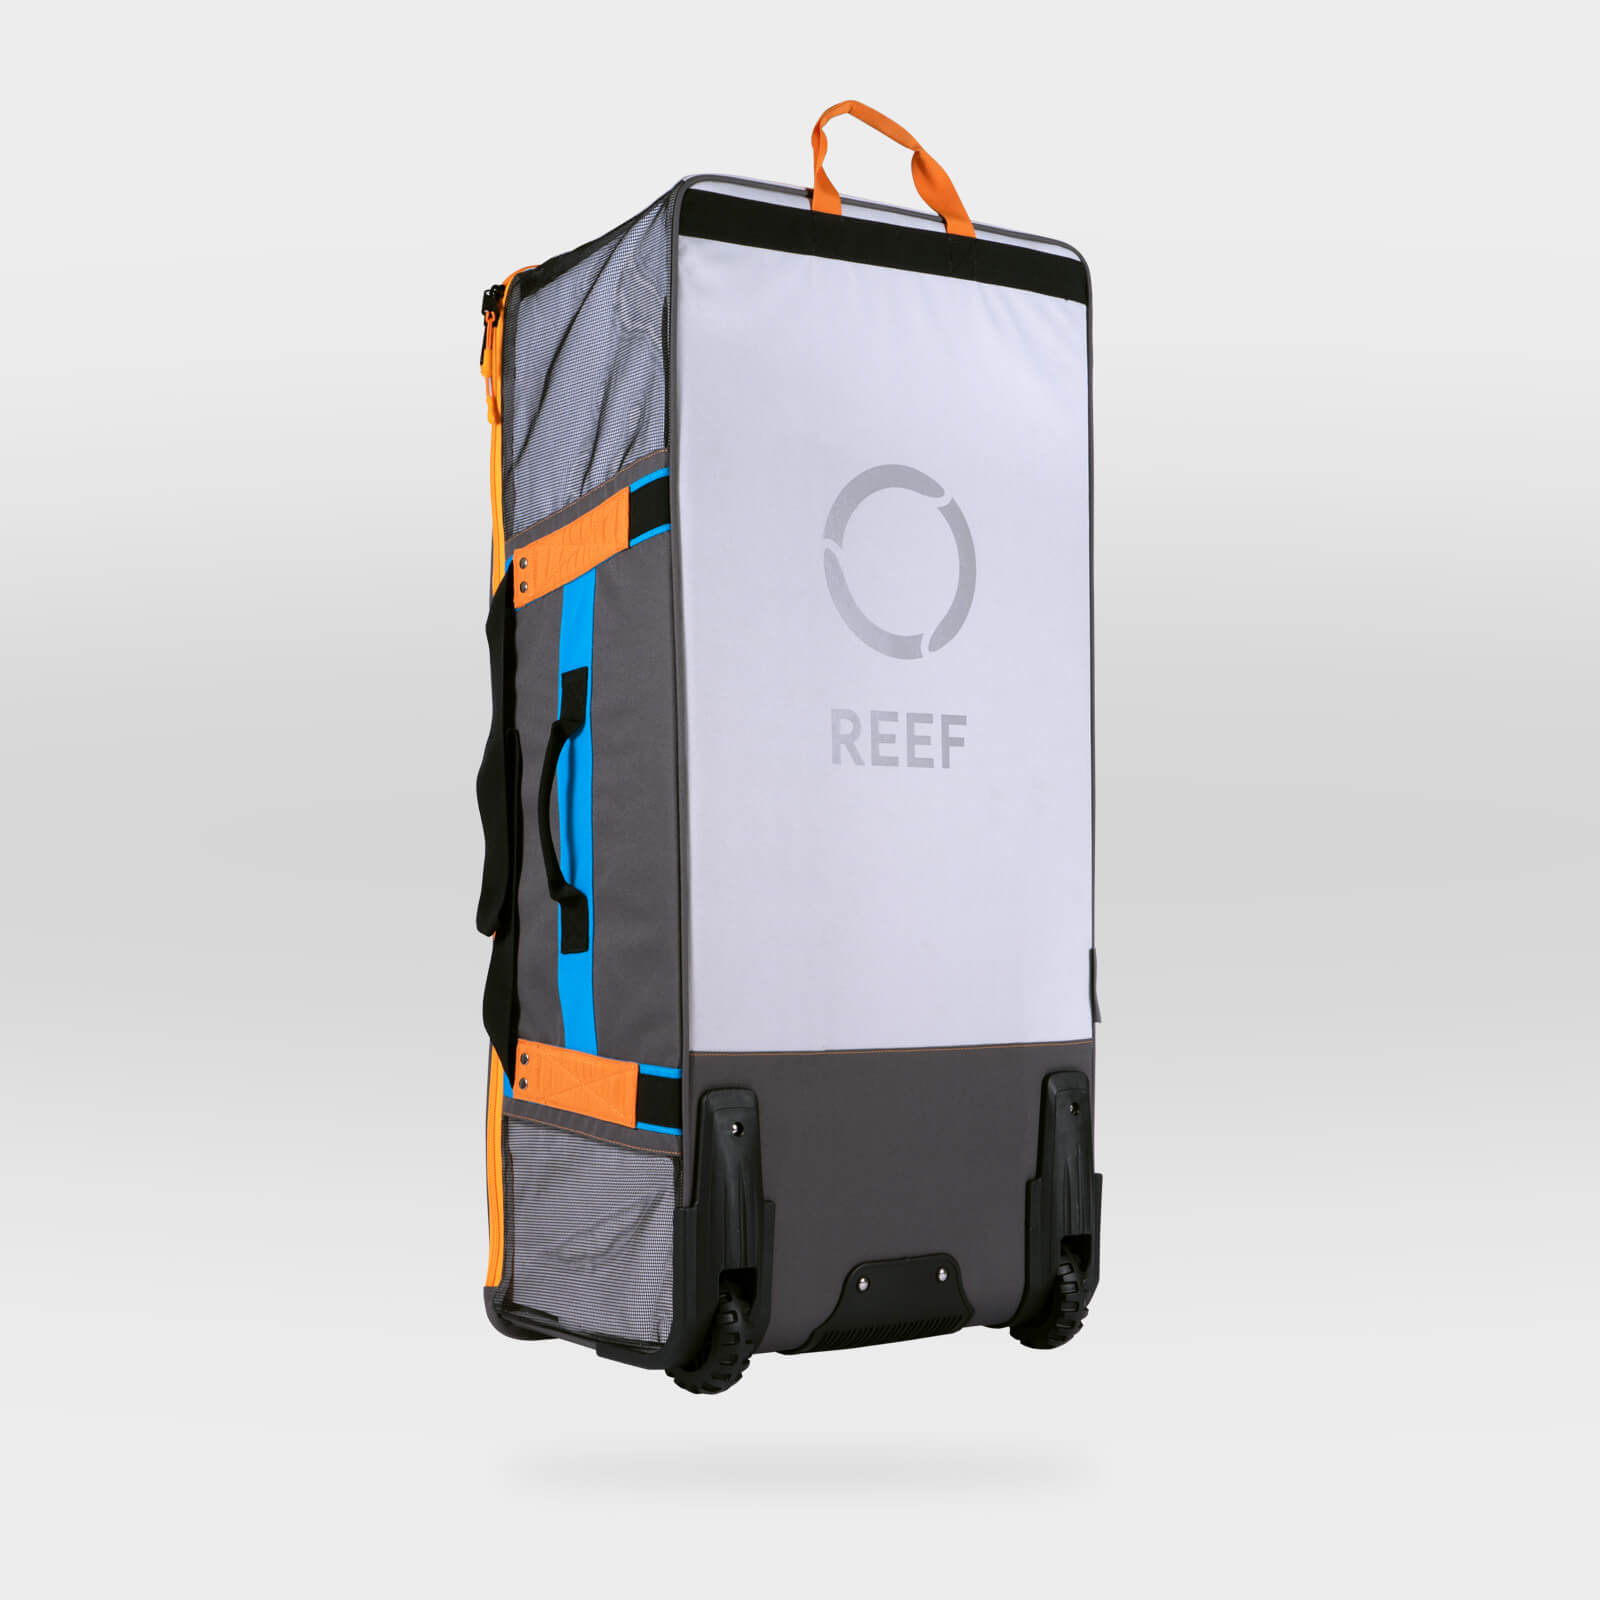 reef lounge carrying bag